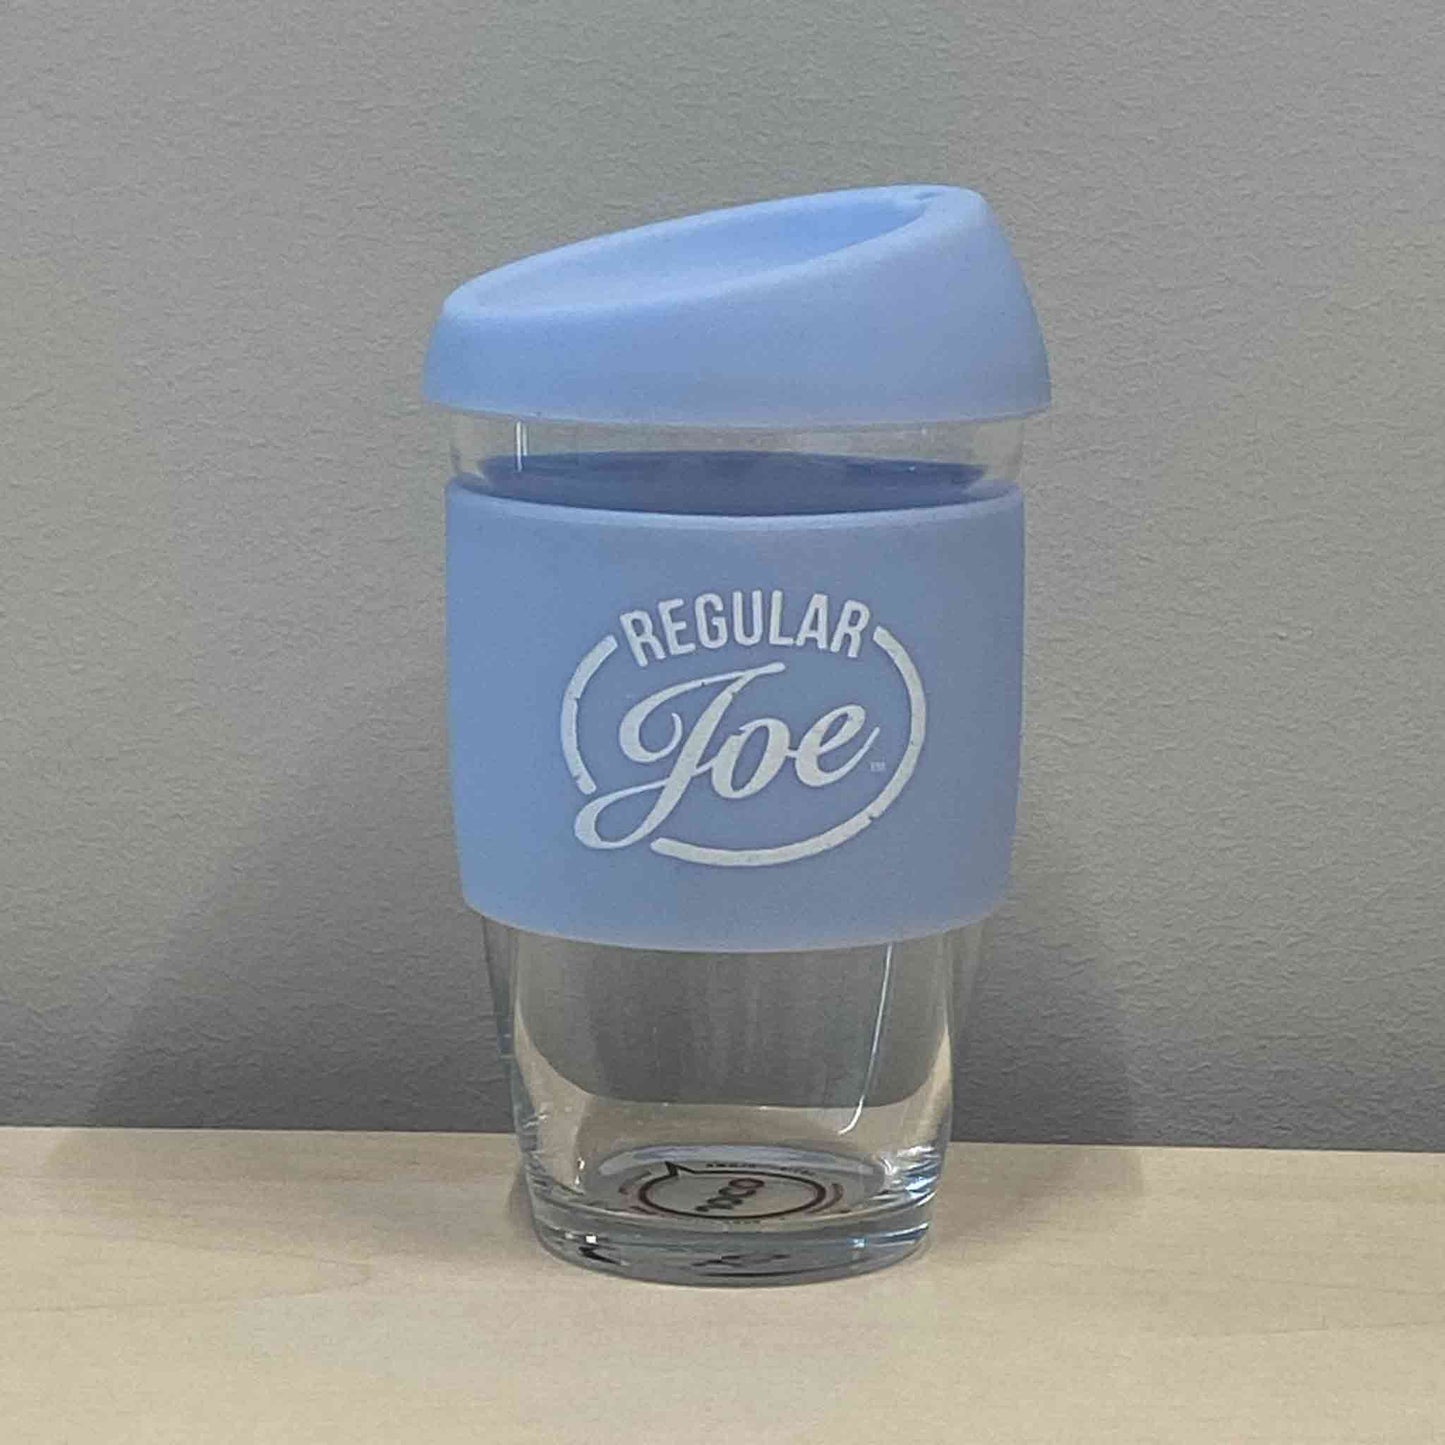 6oz Regular Joe Joco Cup